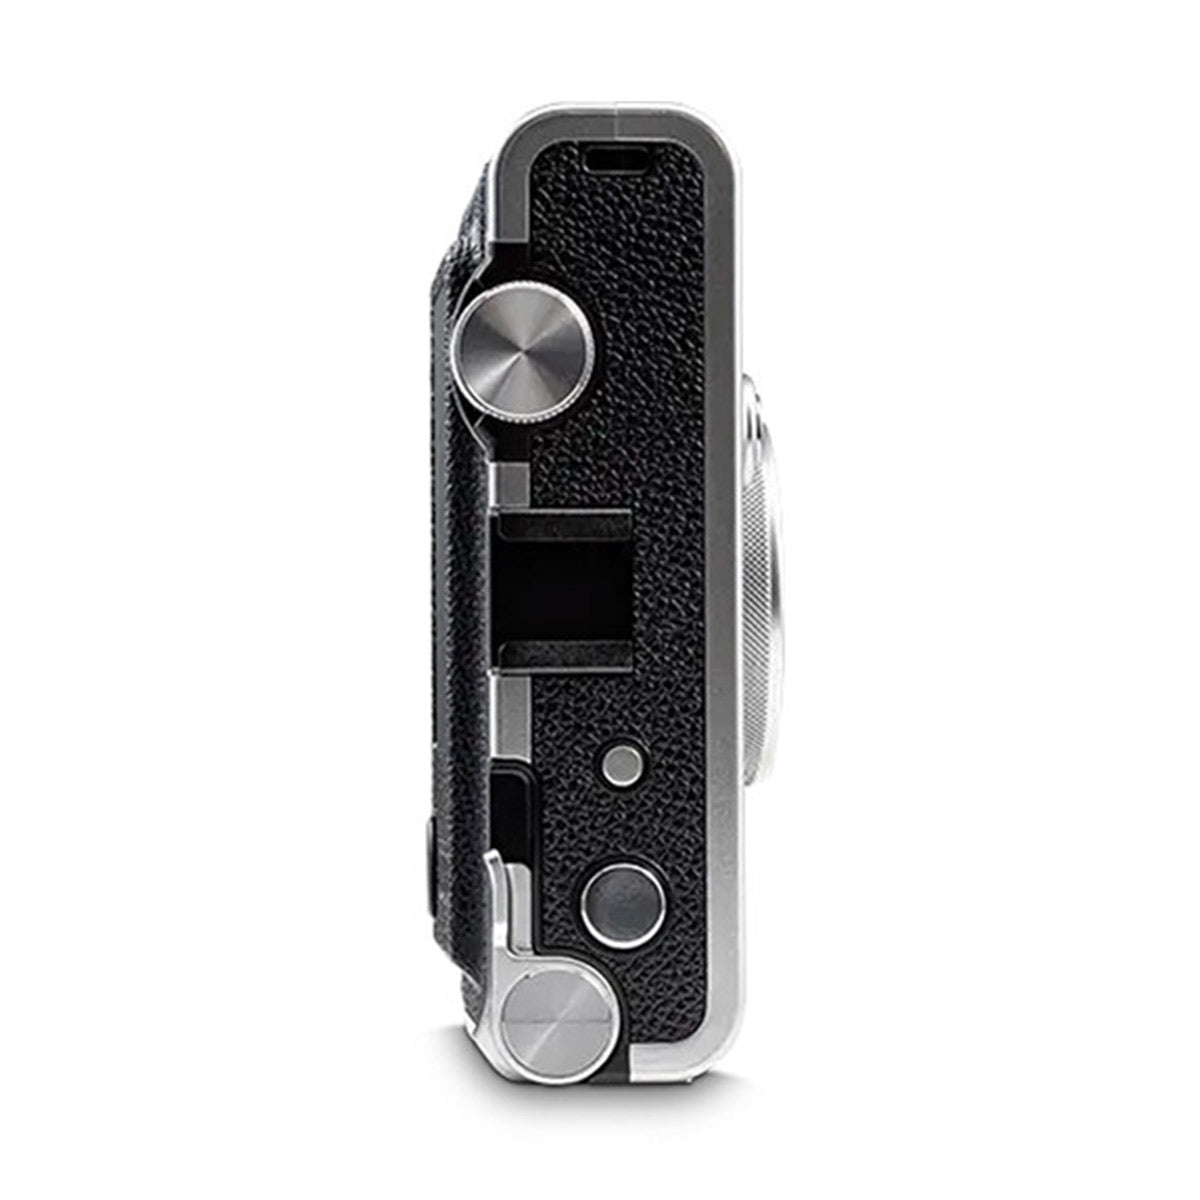 Fujifilm Instax Mini EVO Hybrid Black Instant Camera | Twin Pack Film |  32GB microSD Card with Adapter | Black Camera Case